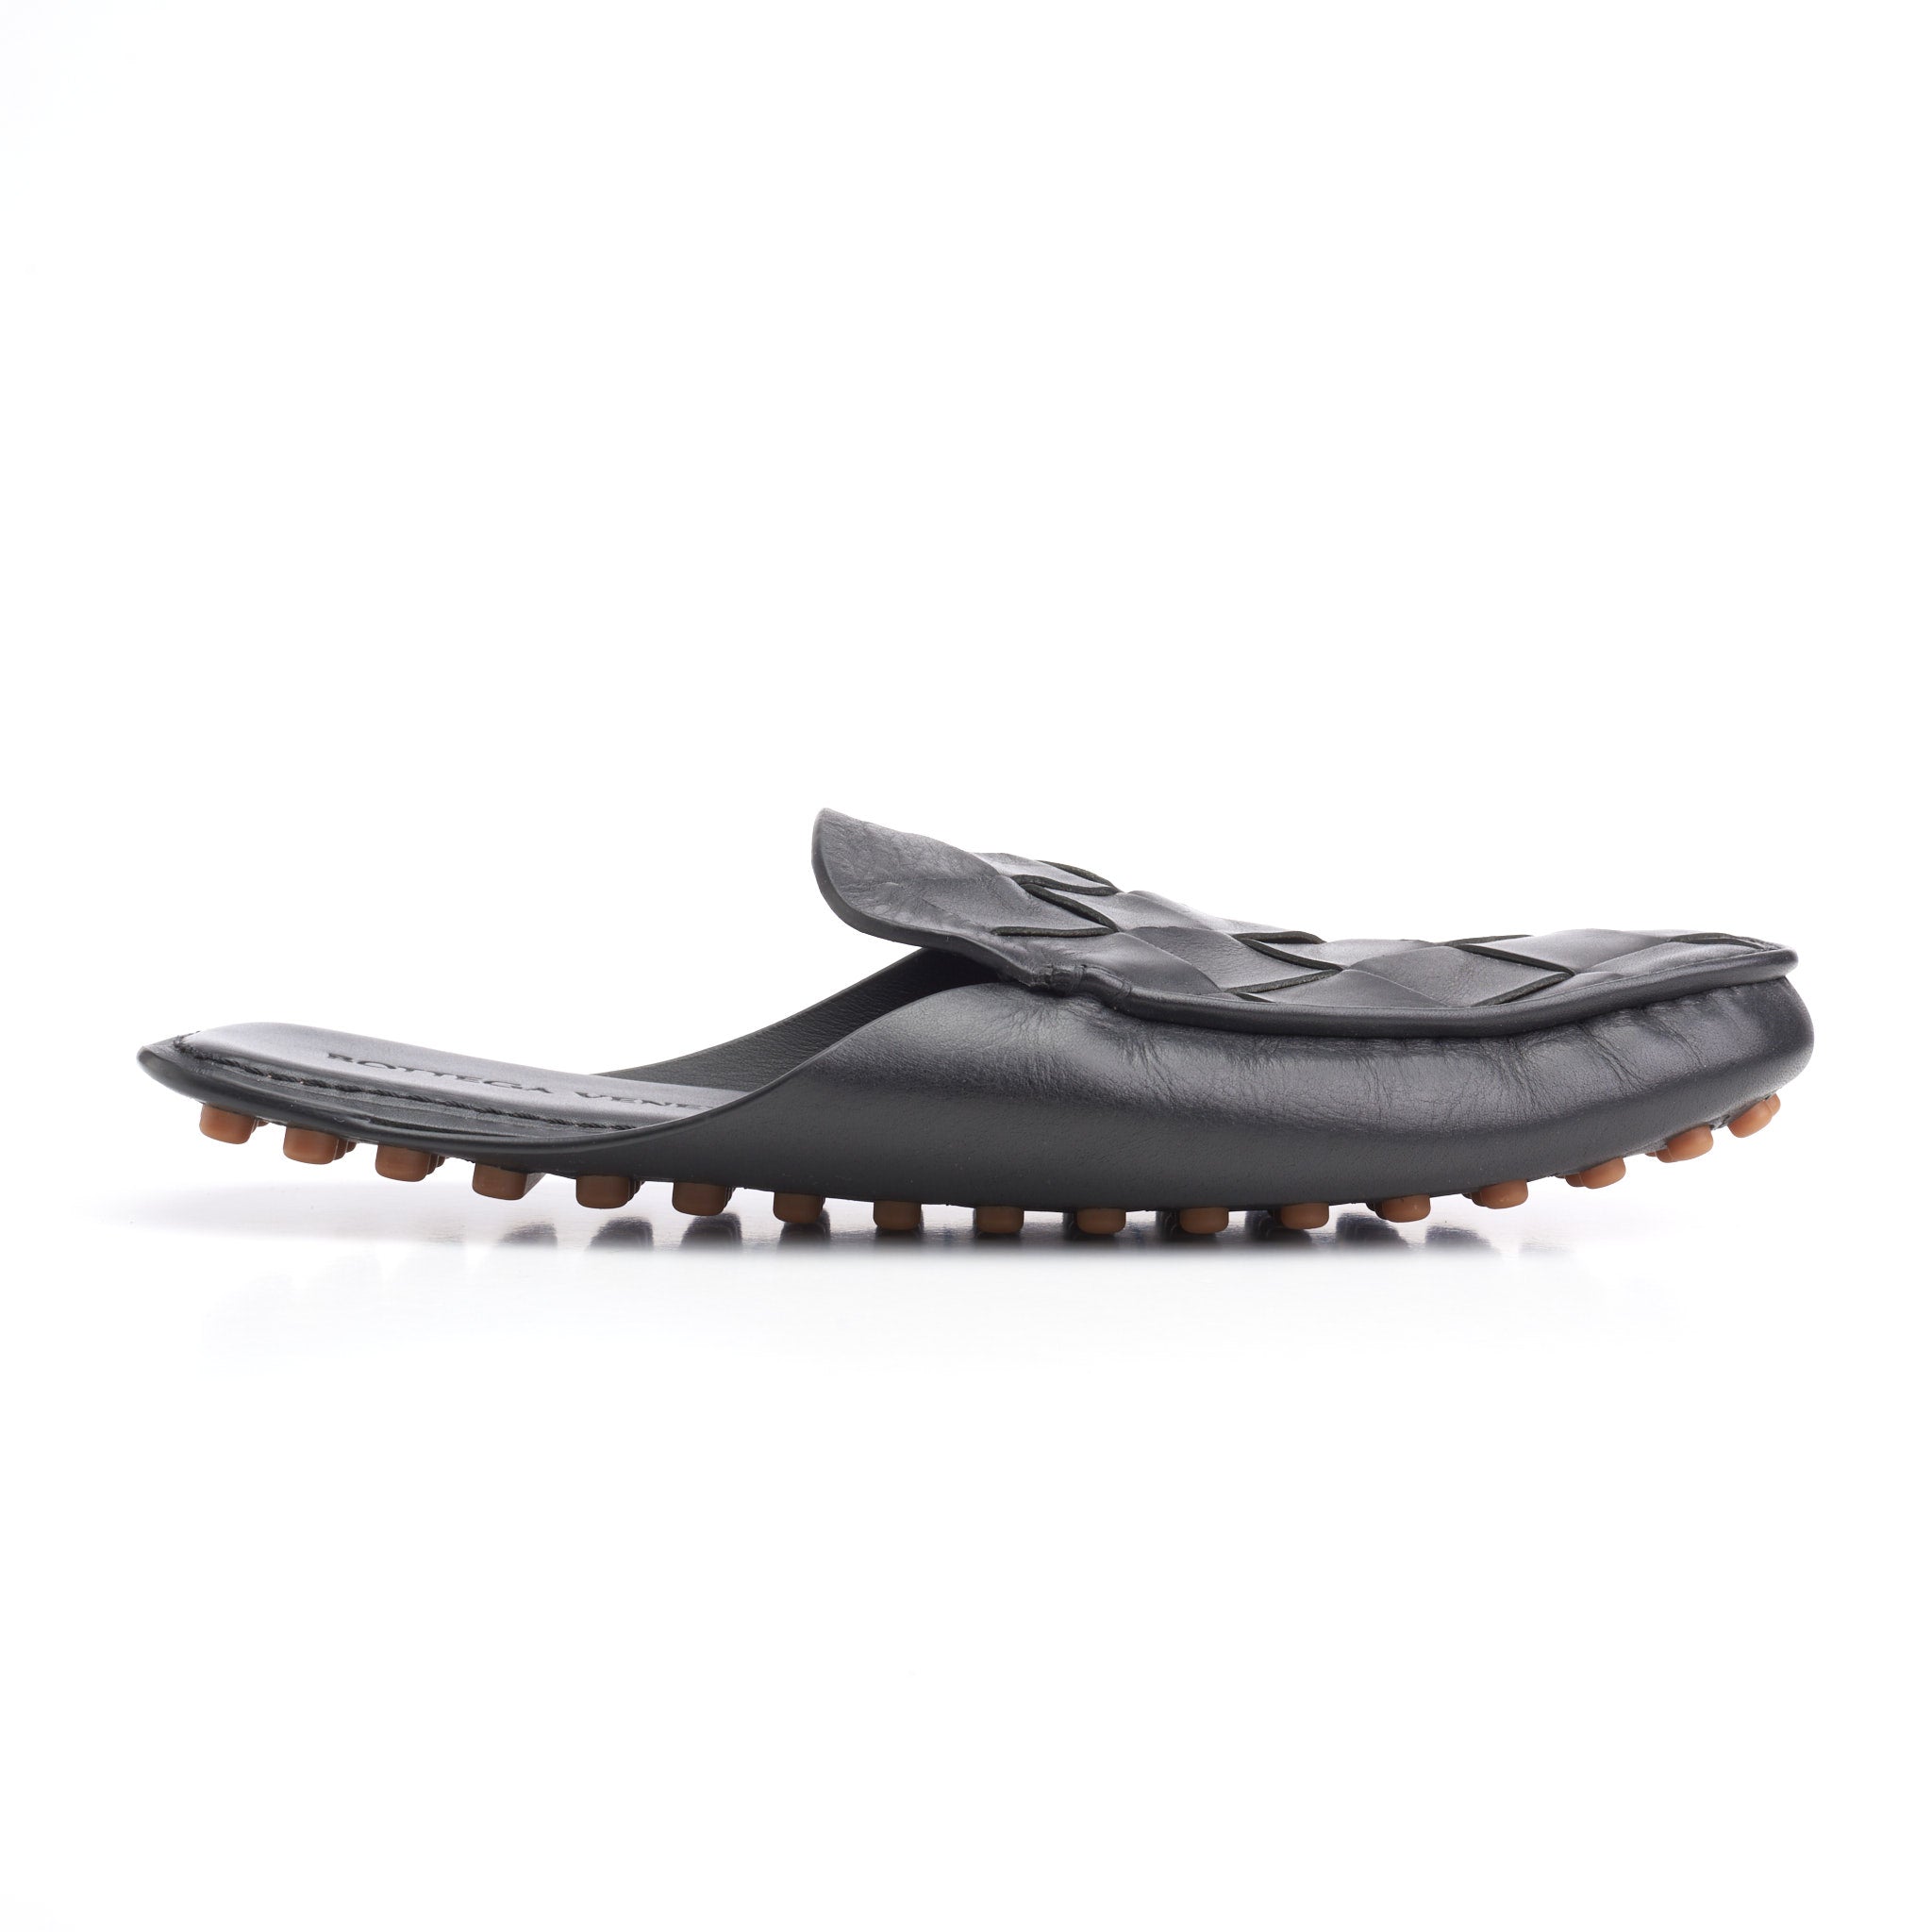 BOTTEGA VENETA Black Woven Calfskin Leather Slipper Shoes EU 39.5 NEW US 6.5 BOTTEGA VENETA